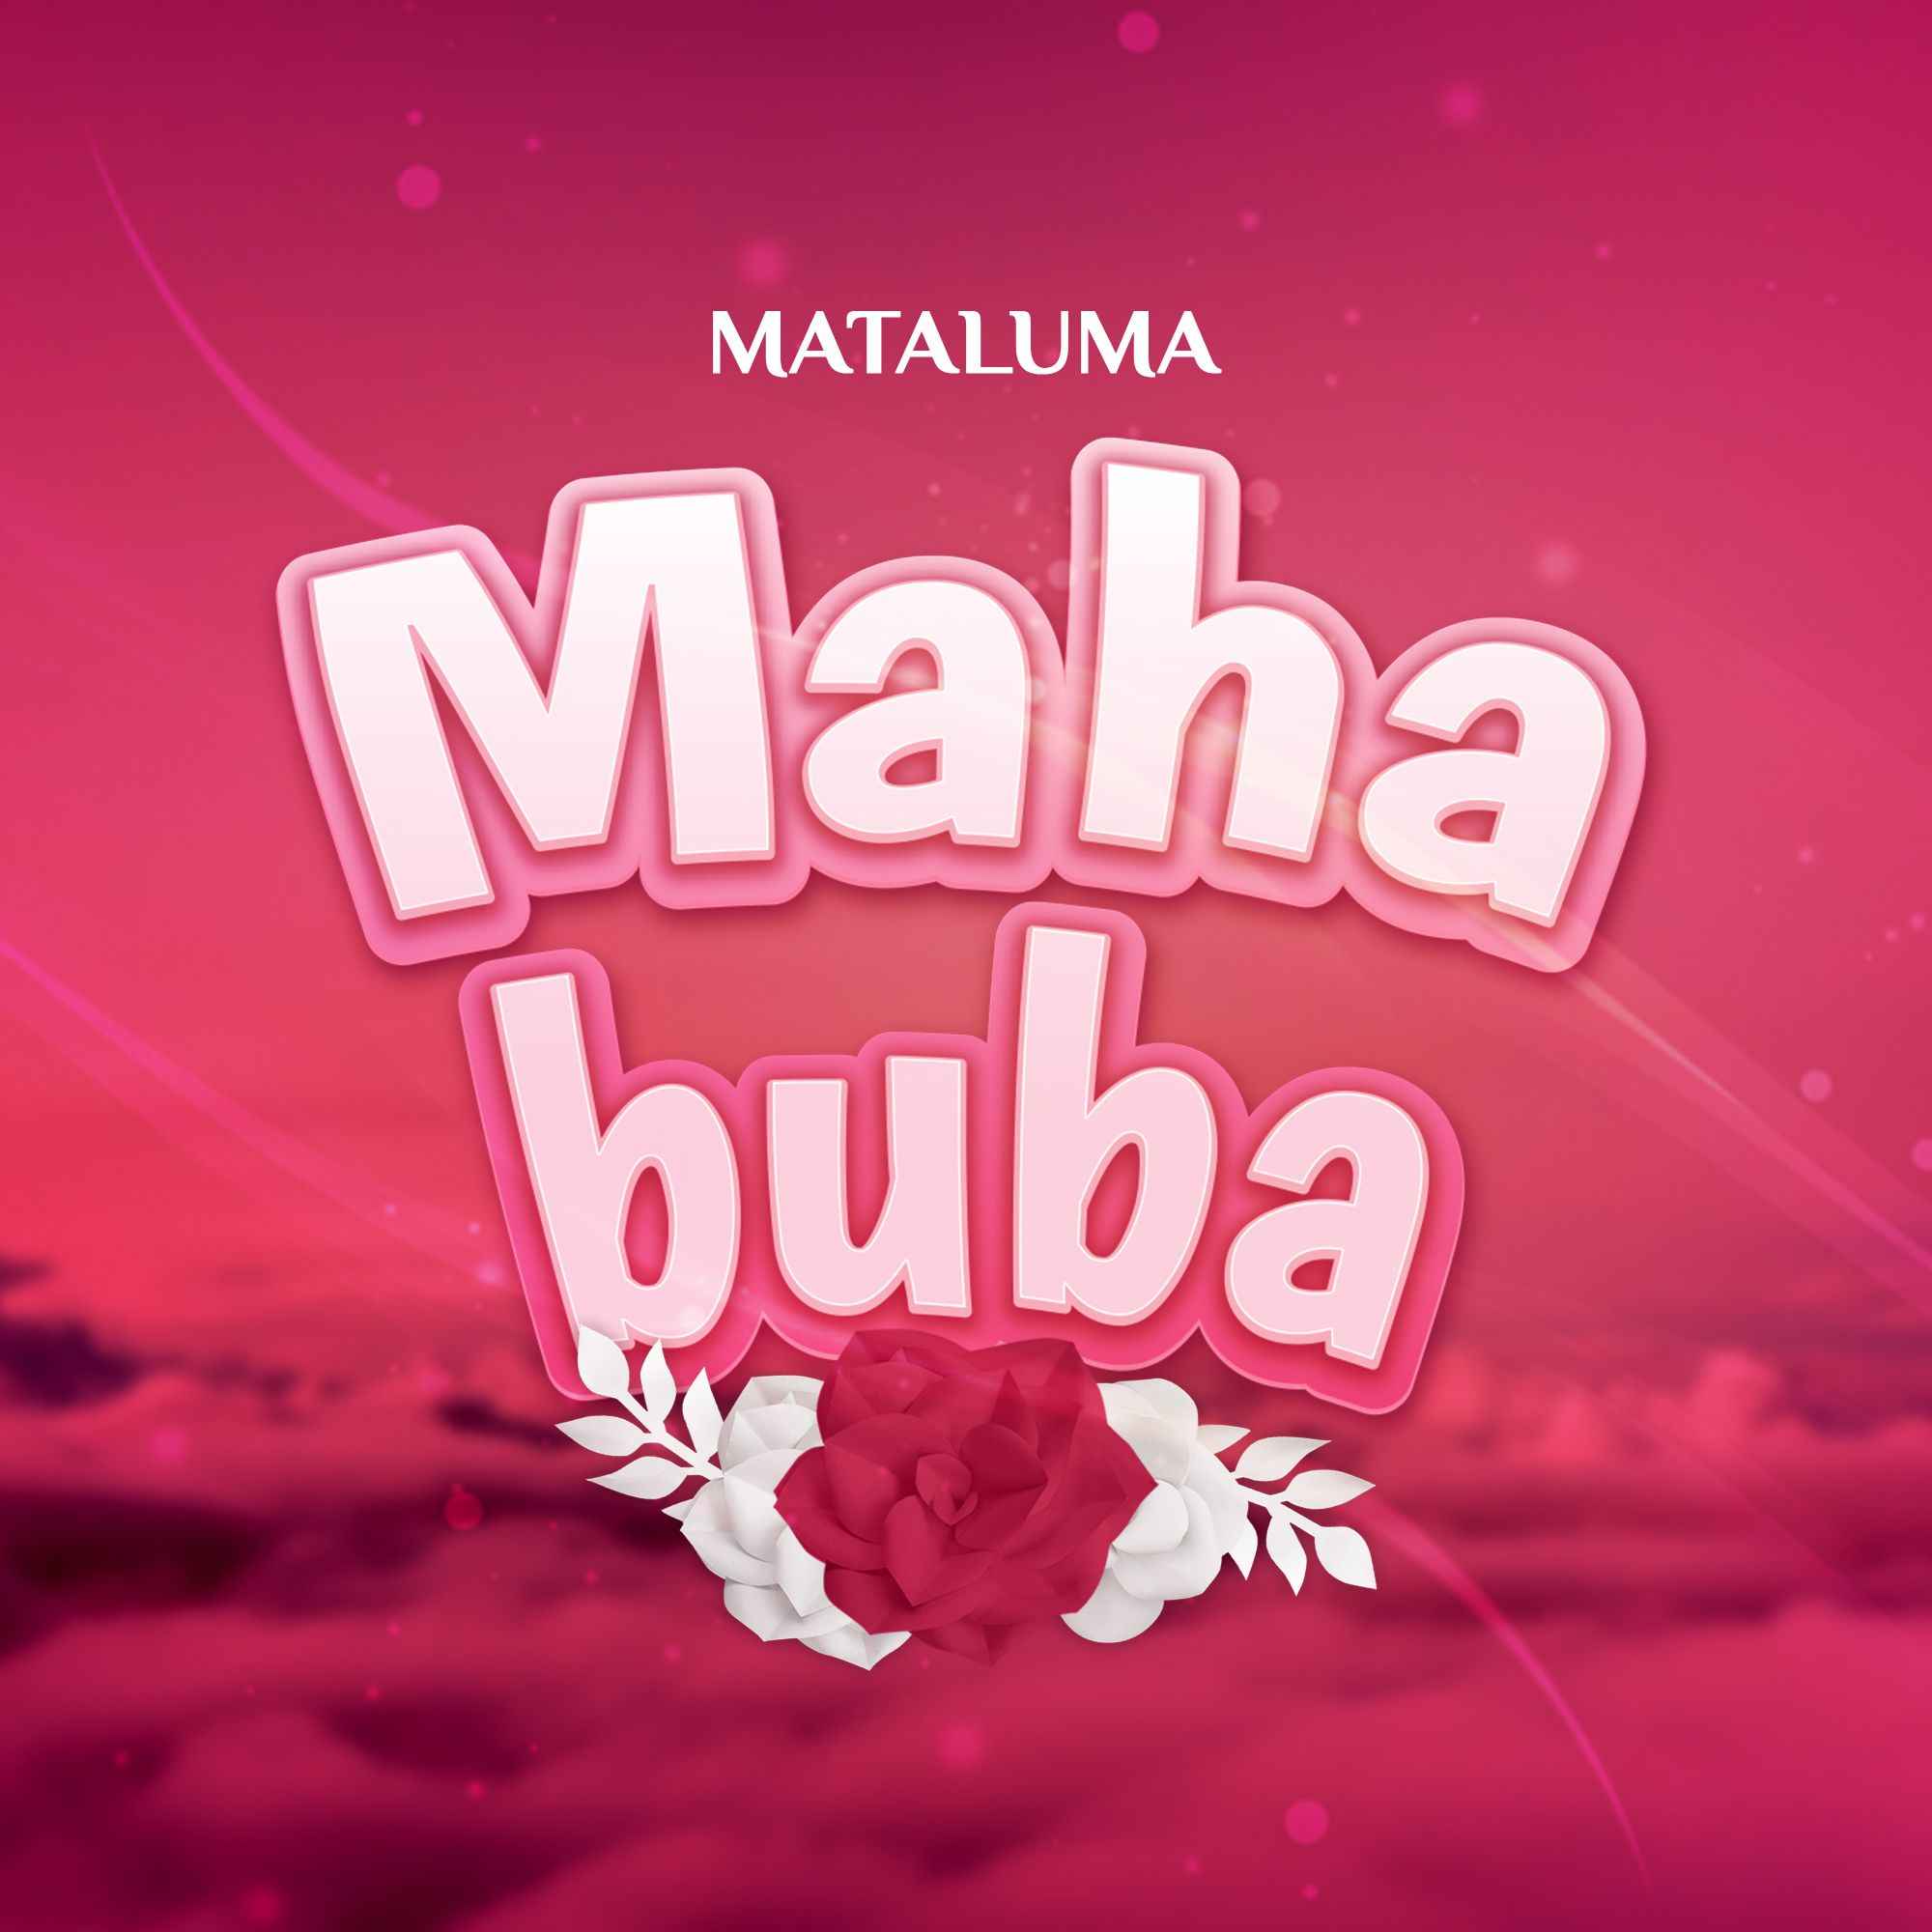 Mataluma - Mahabuba Mp3 Download